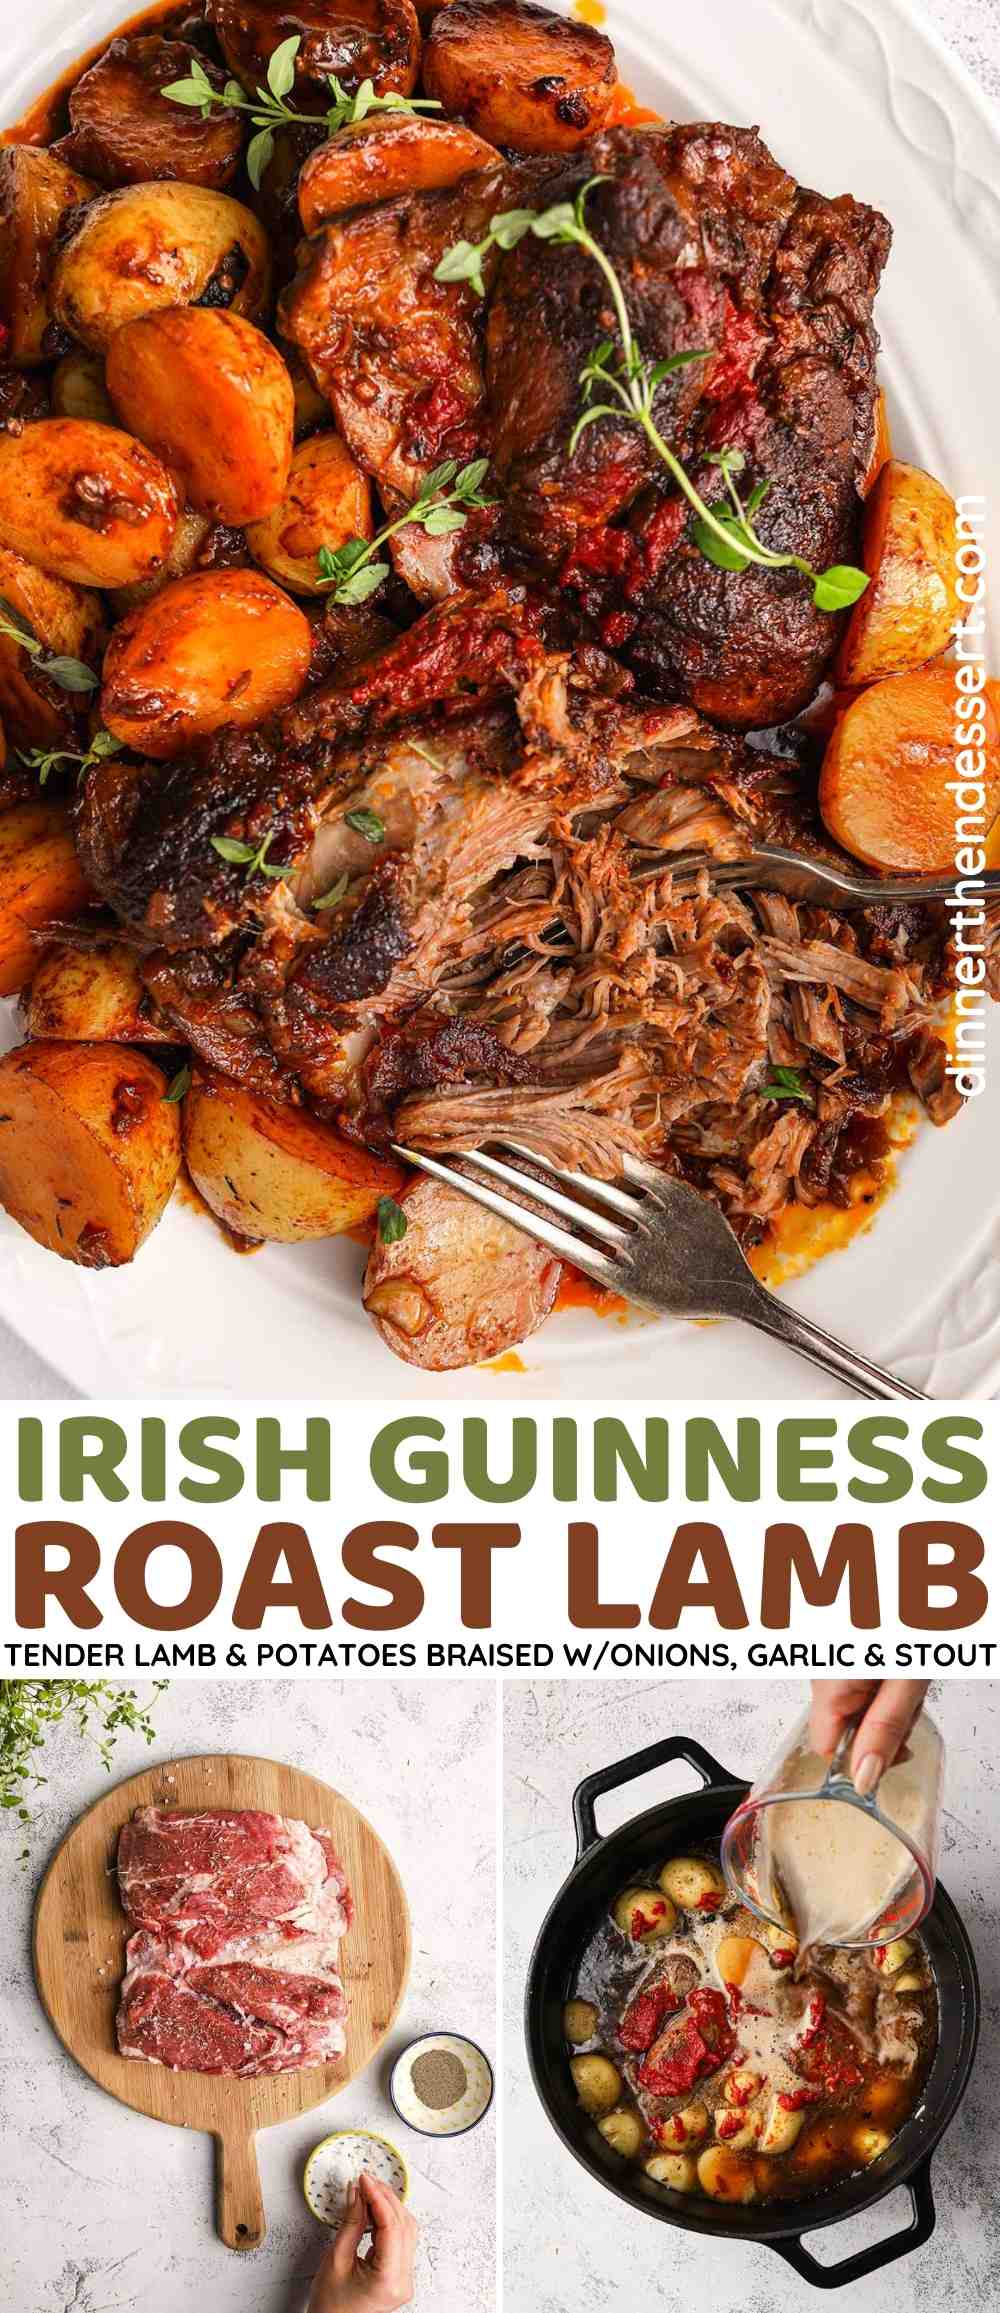 Irish Guinness Roast Lamb collage